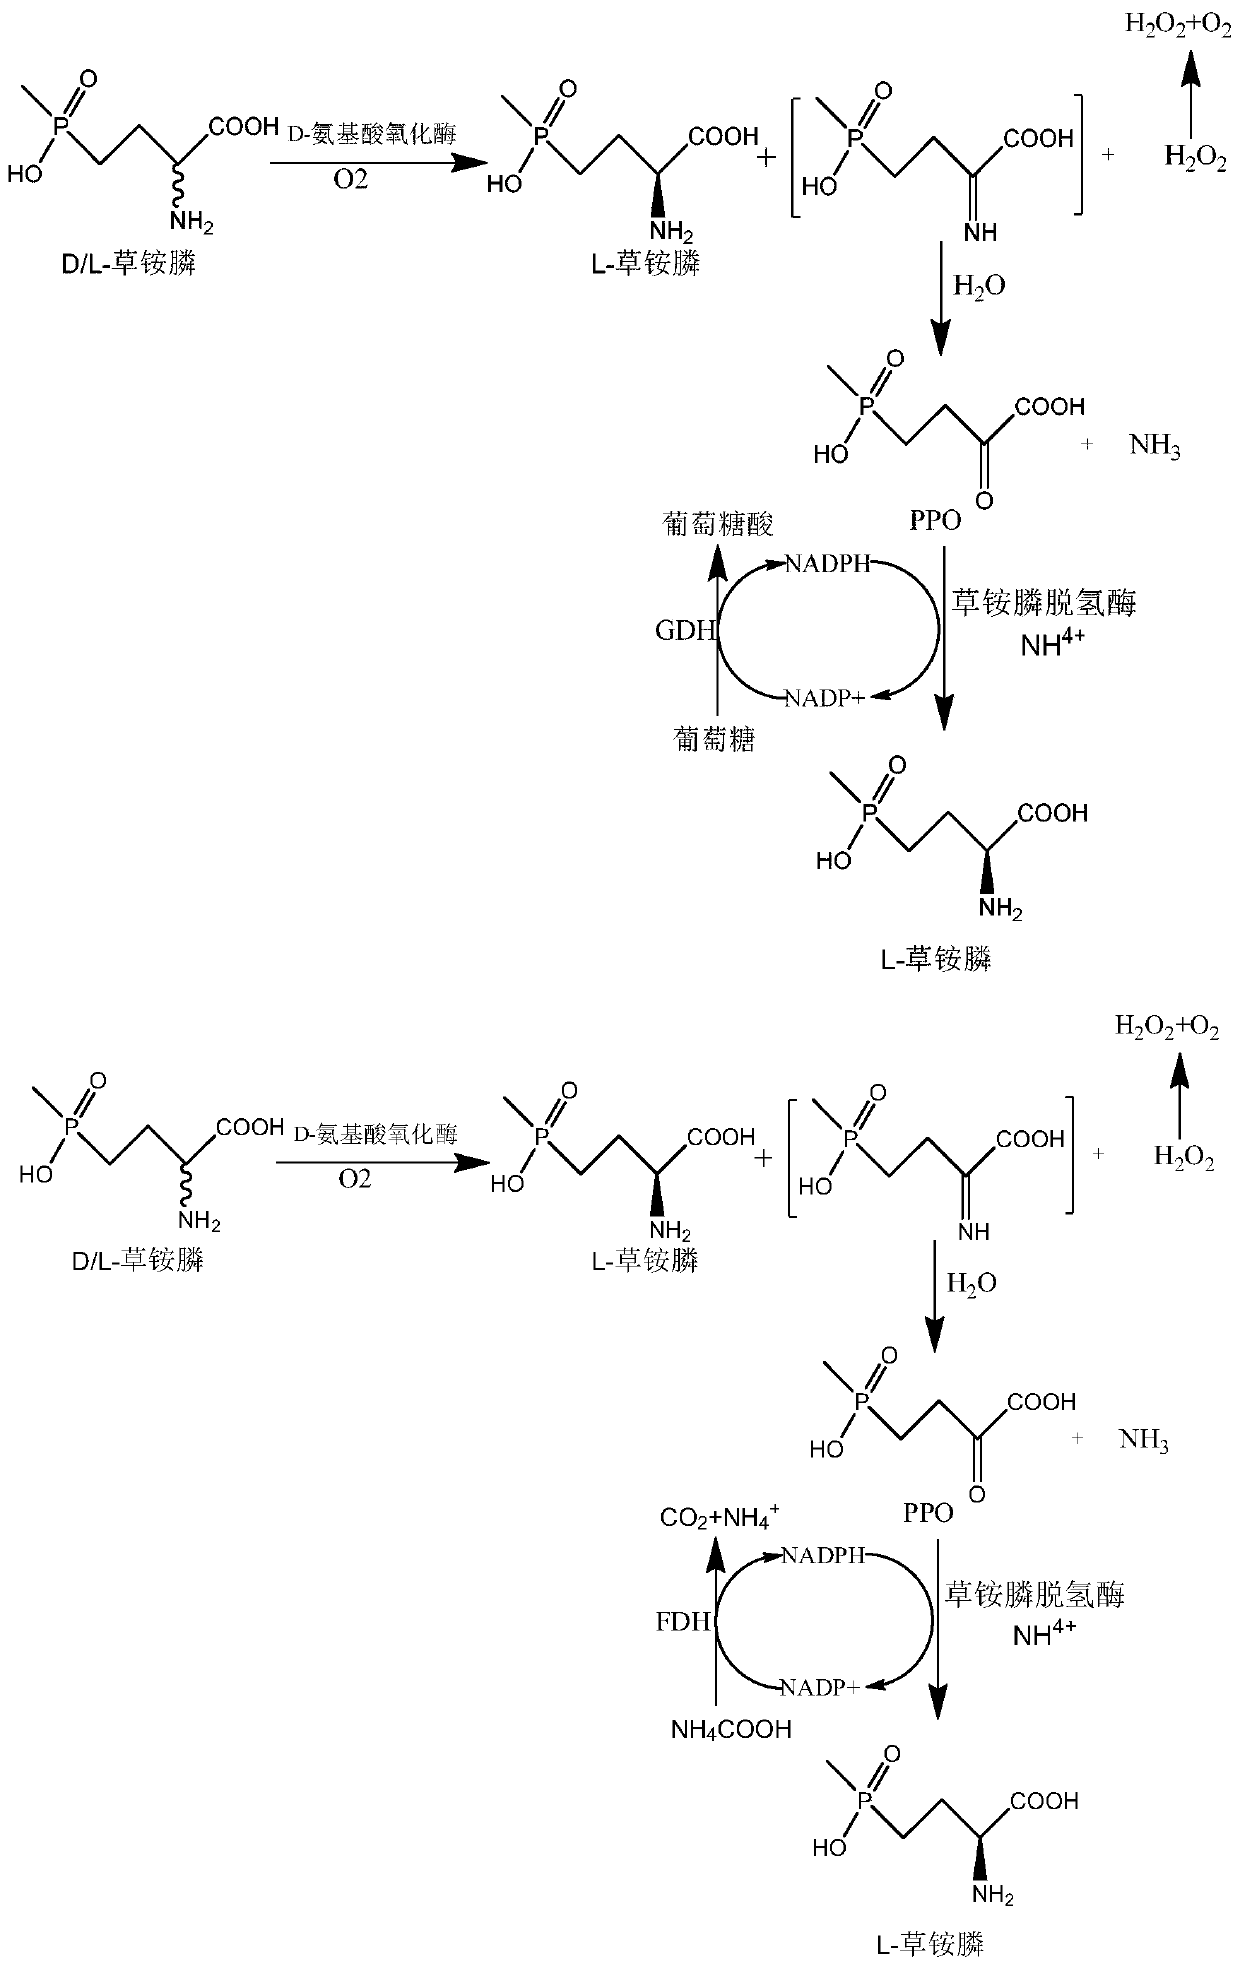 Recombinant glufosinate-ammonium dehydrogenase, genetically engineered bacterium and application of recombinant glufosinate-ammonium dehydrogenase in preparation of L-glufosinate-ammonium